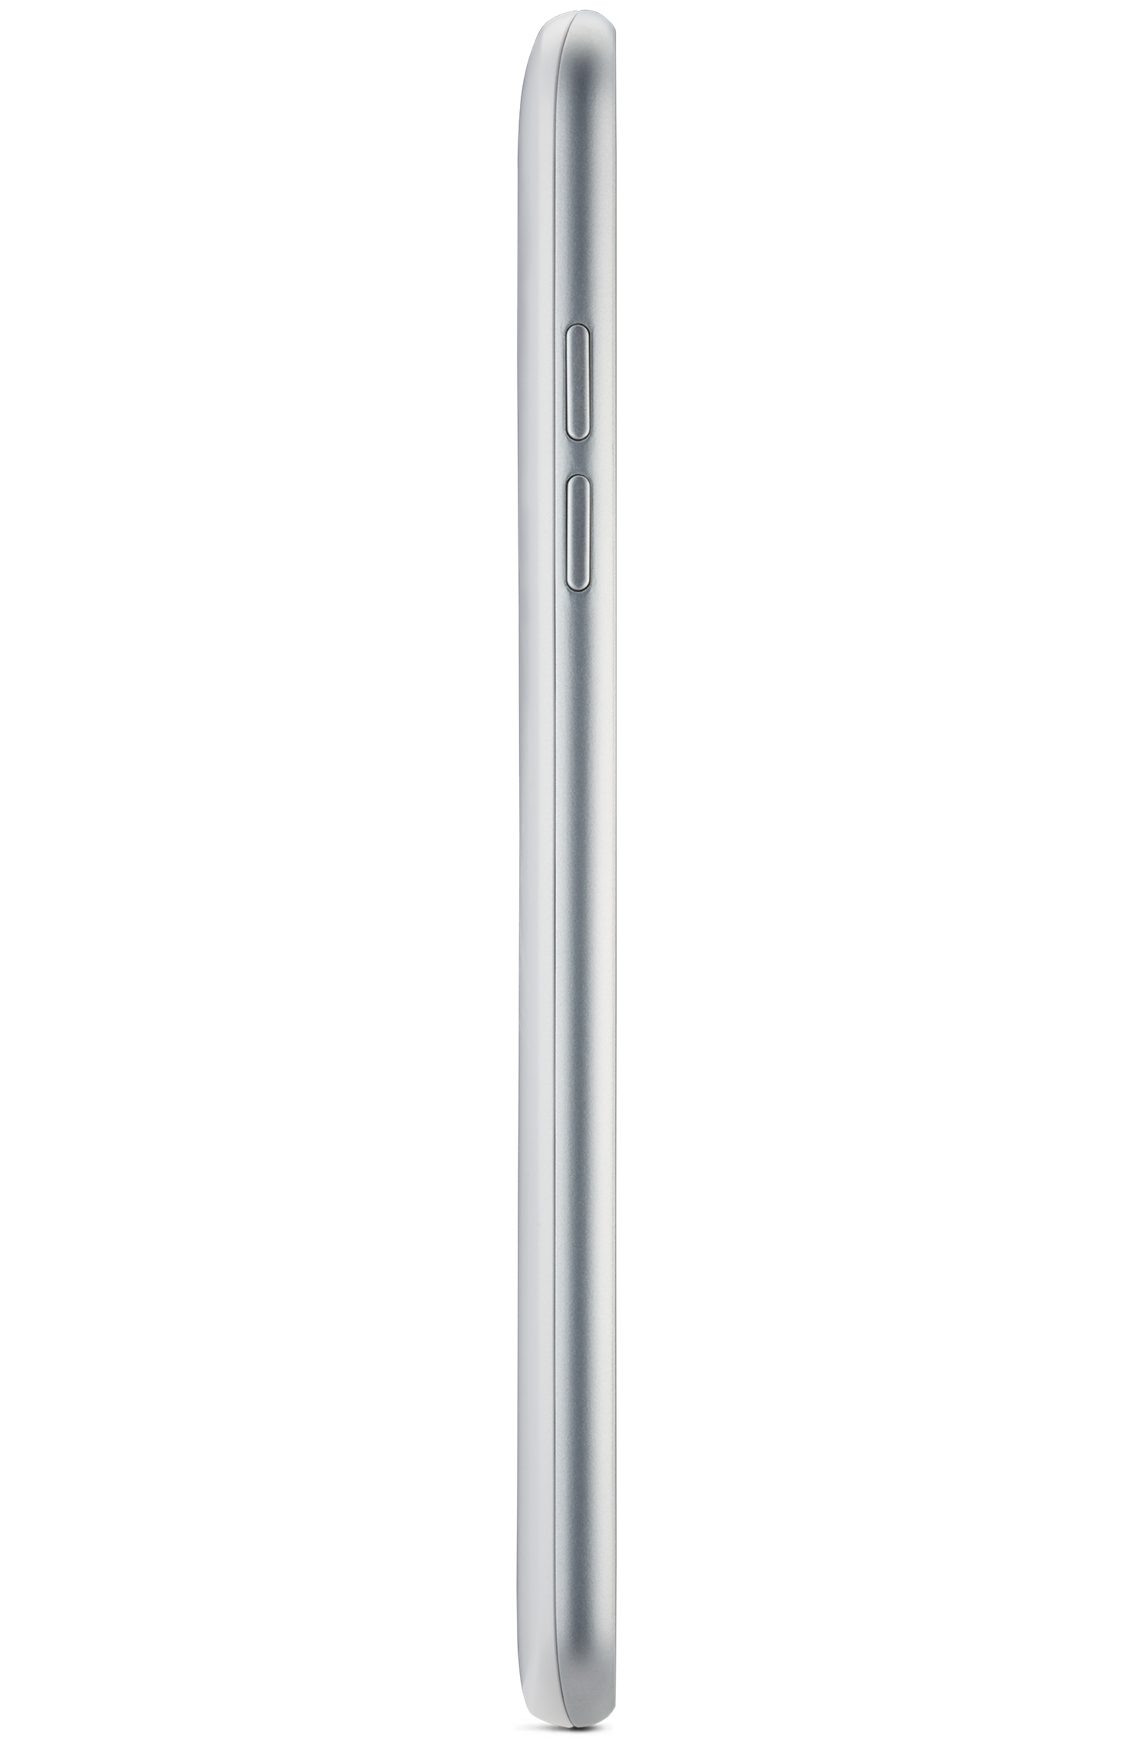 Boost Mobile LG Tribute Empire 16GB Prepaid Smartphone, Silver - image 2 of 5